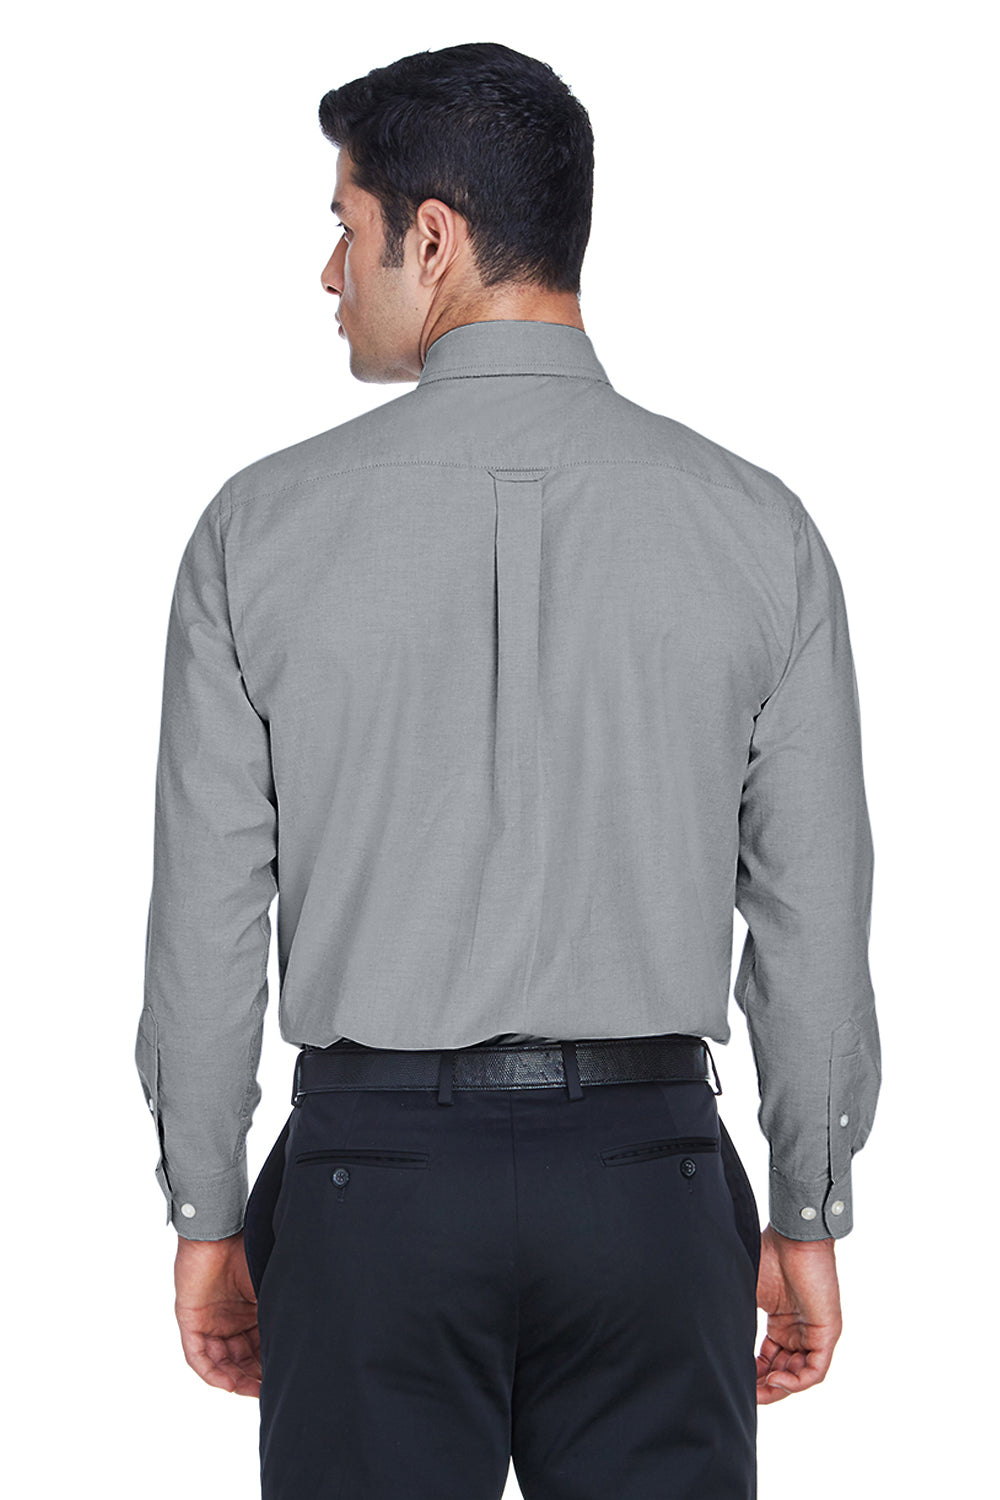 Harriton M600 Mens Oxford Wrinkle Resistant Long Sleeve Button Down Shirt w/ Pocket Oxford Grey Back